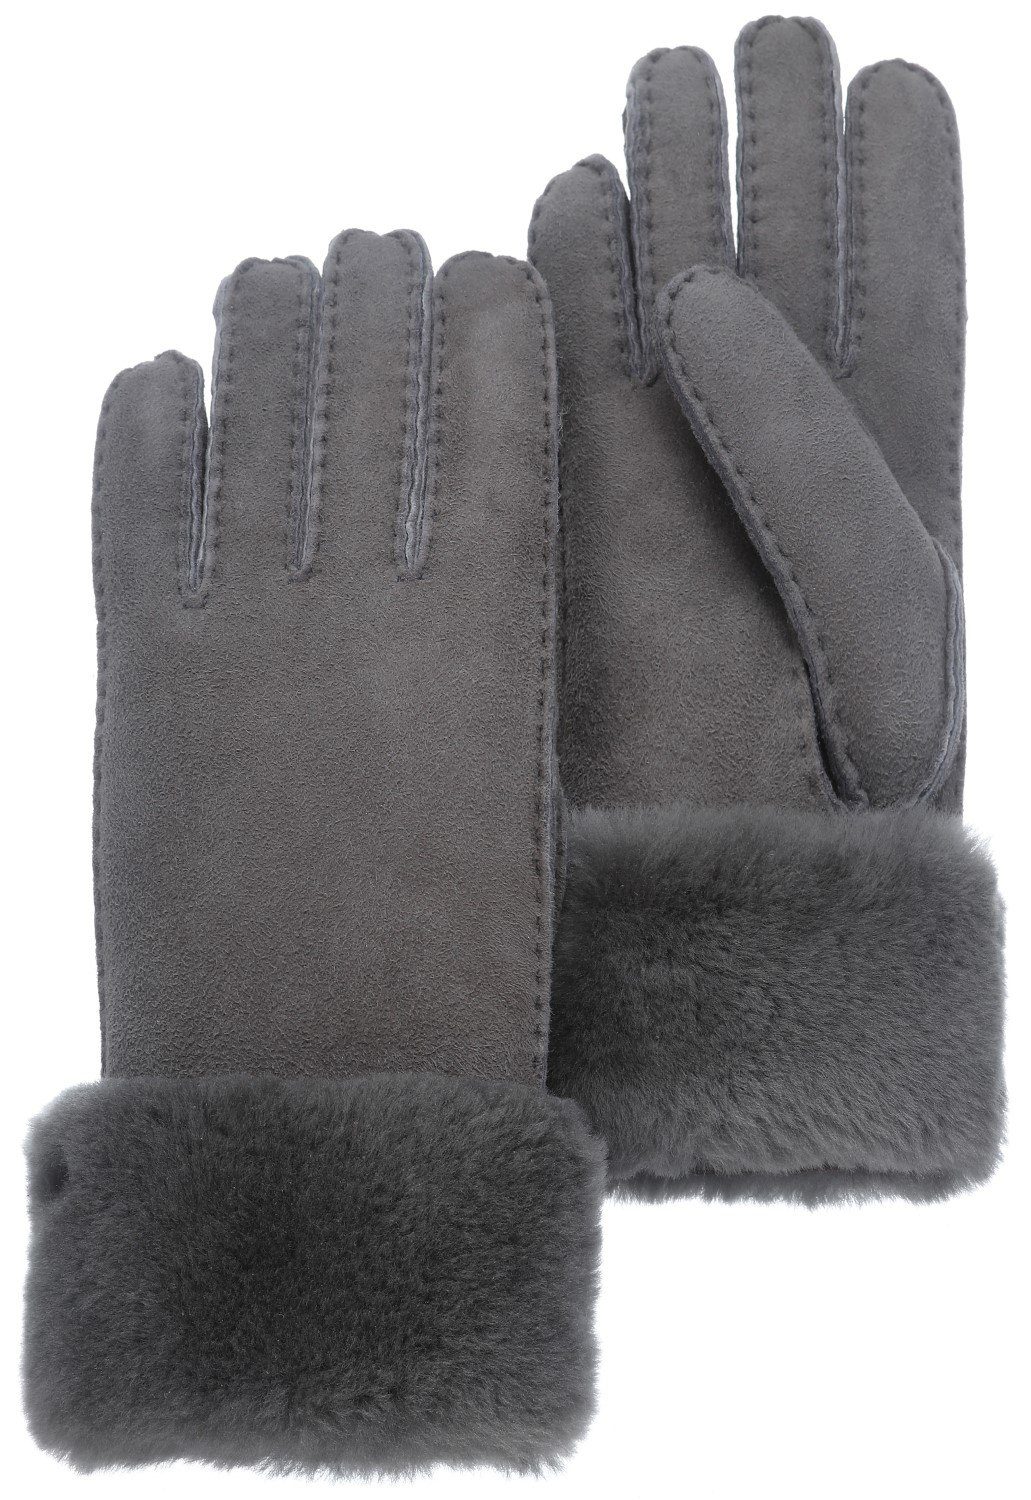 PEARLWOOD Lederhandschuhe warme Wildleder-Handschuhe Lammfell-Futter & Umschlag 230 grey